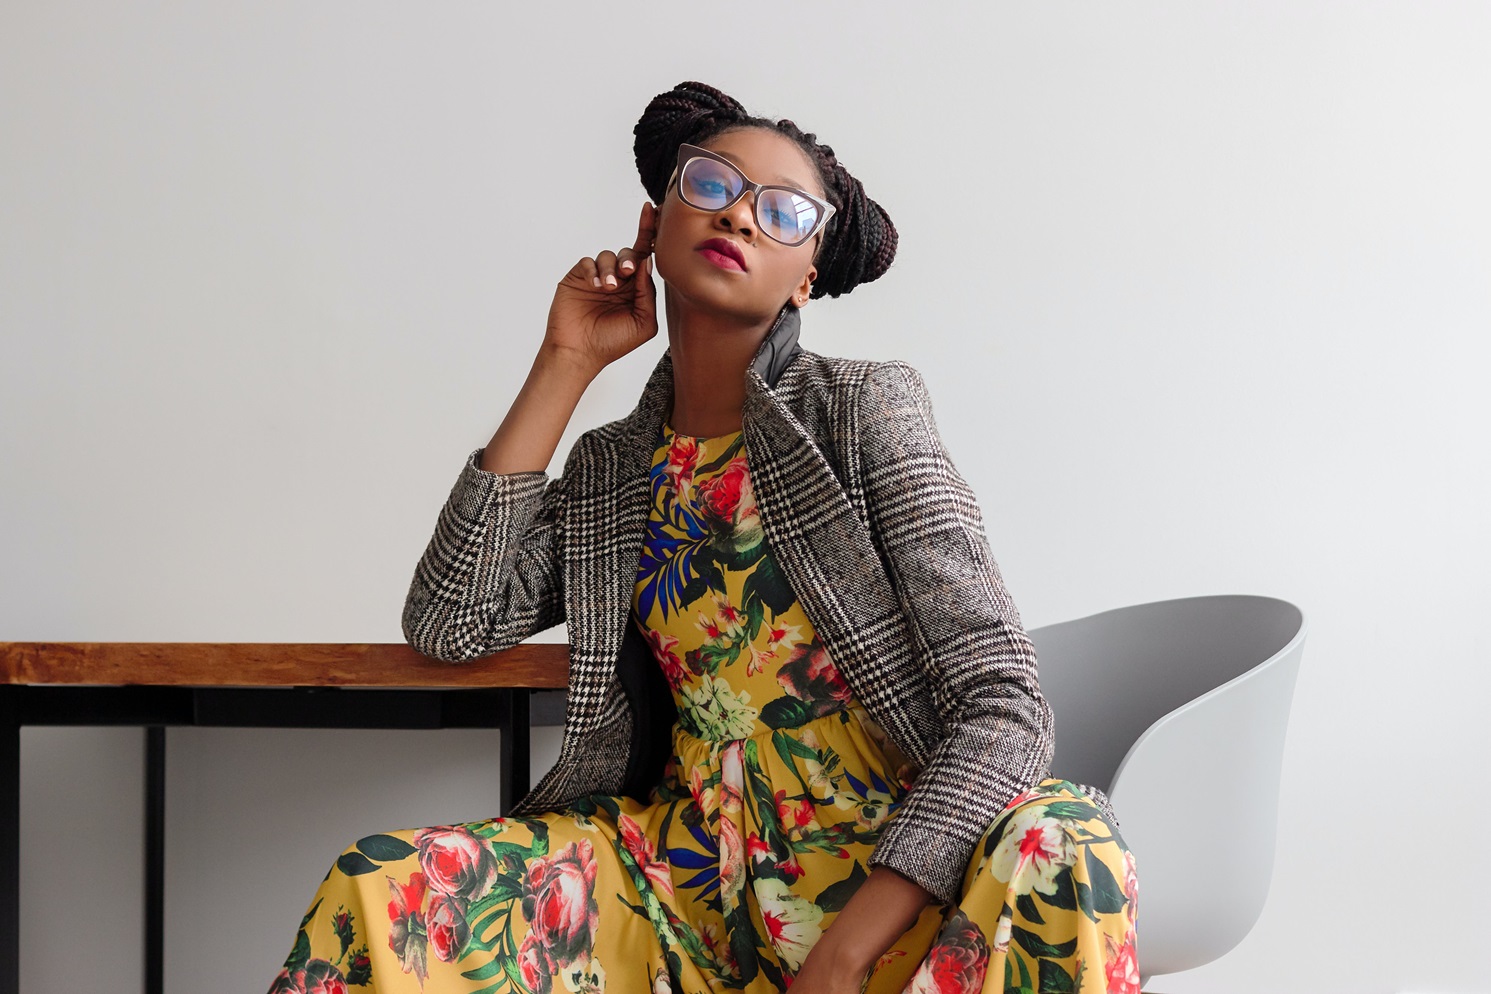 African fashion demand skyrocketing according to UNESCO